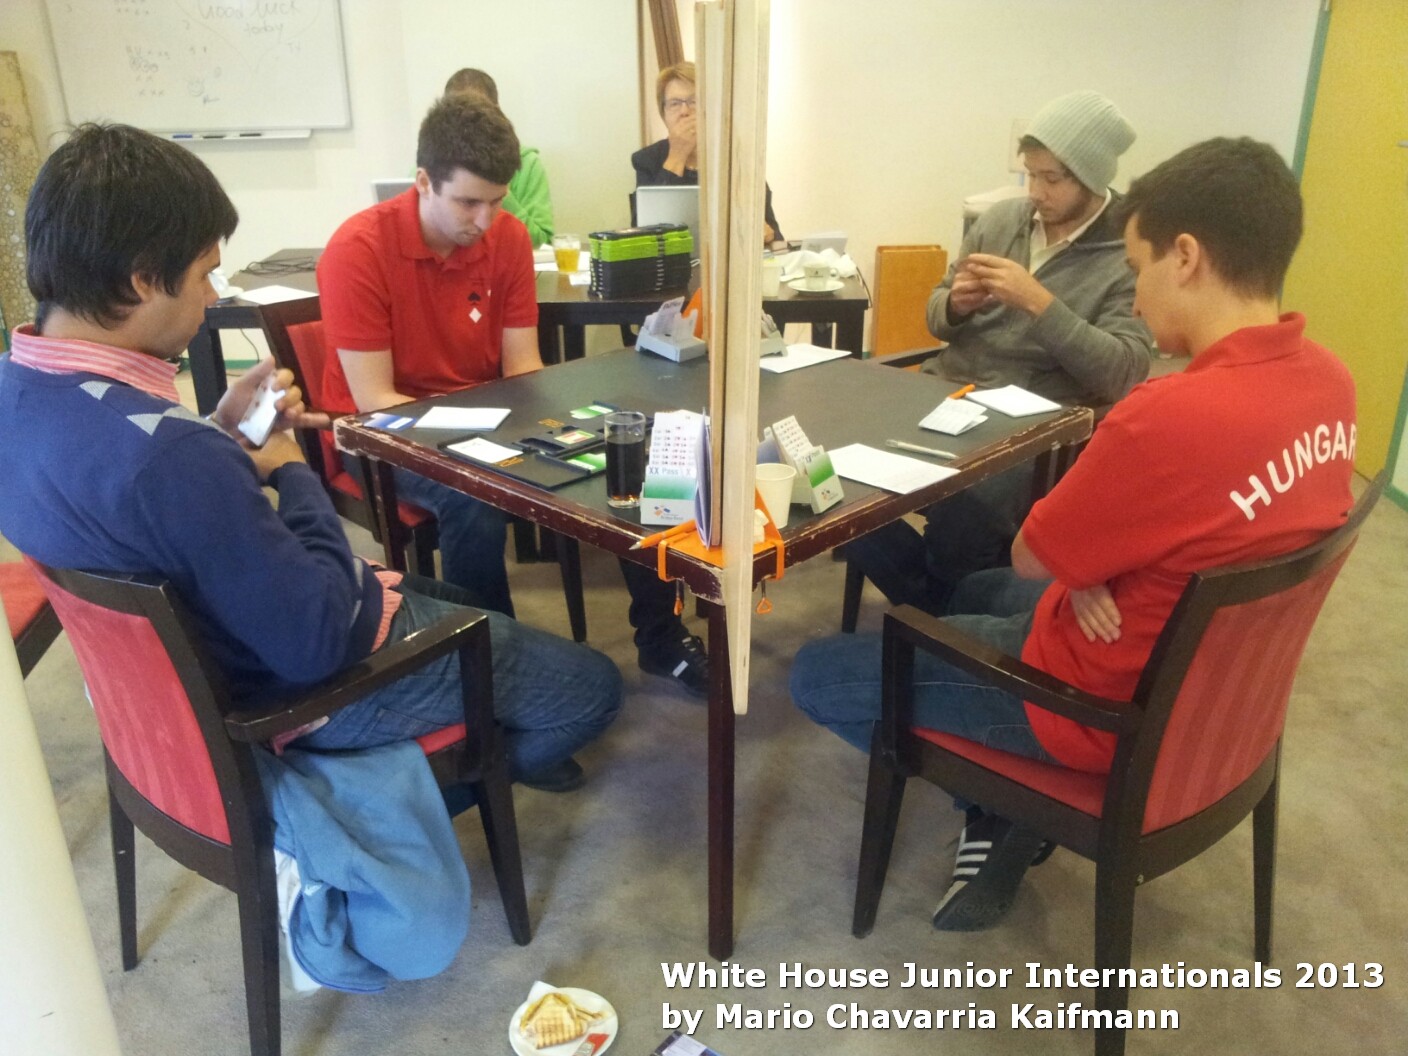 2013 White House Junior Internationals: La Final